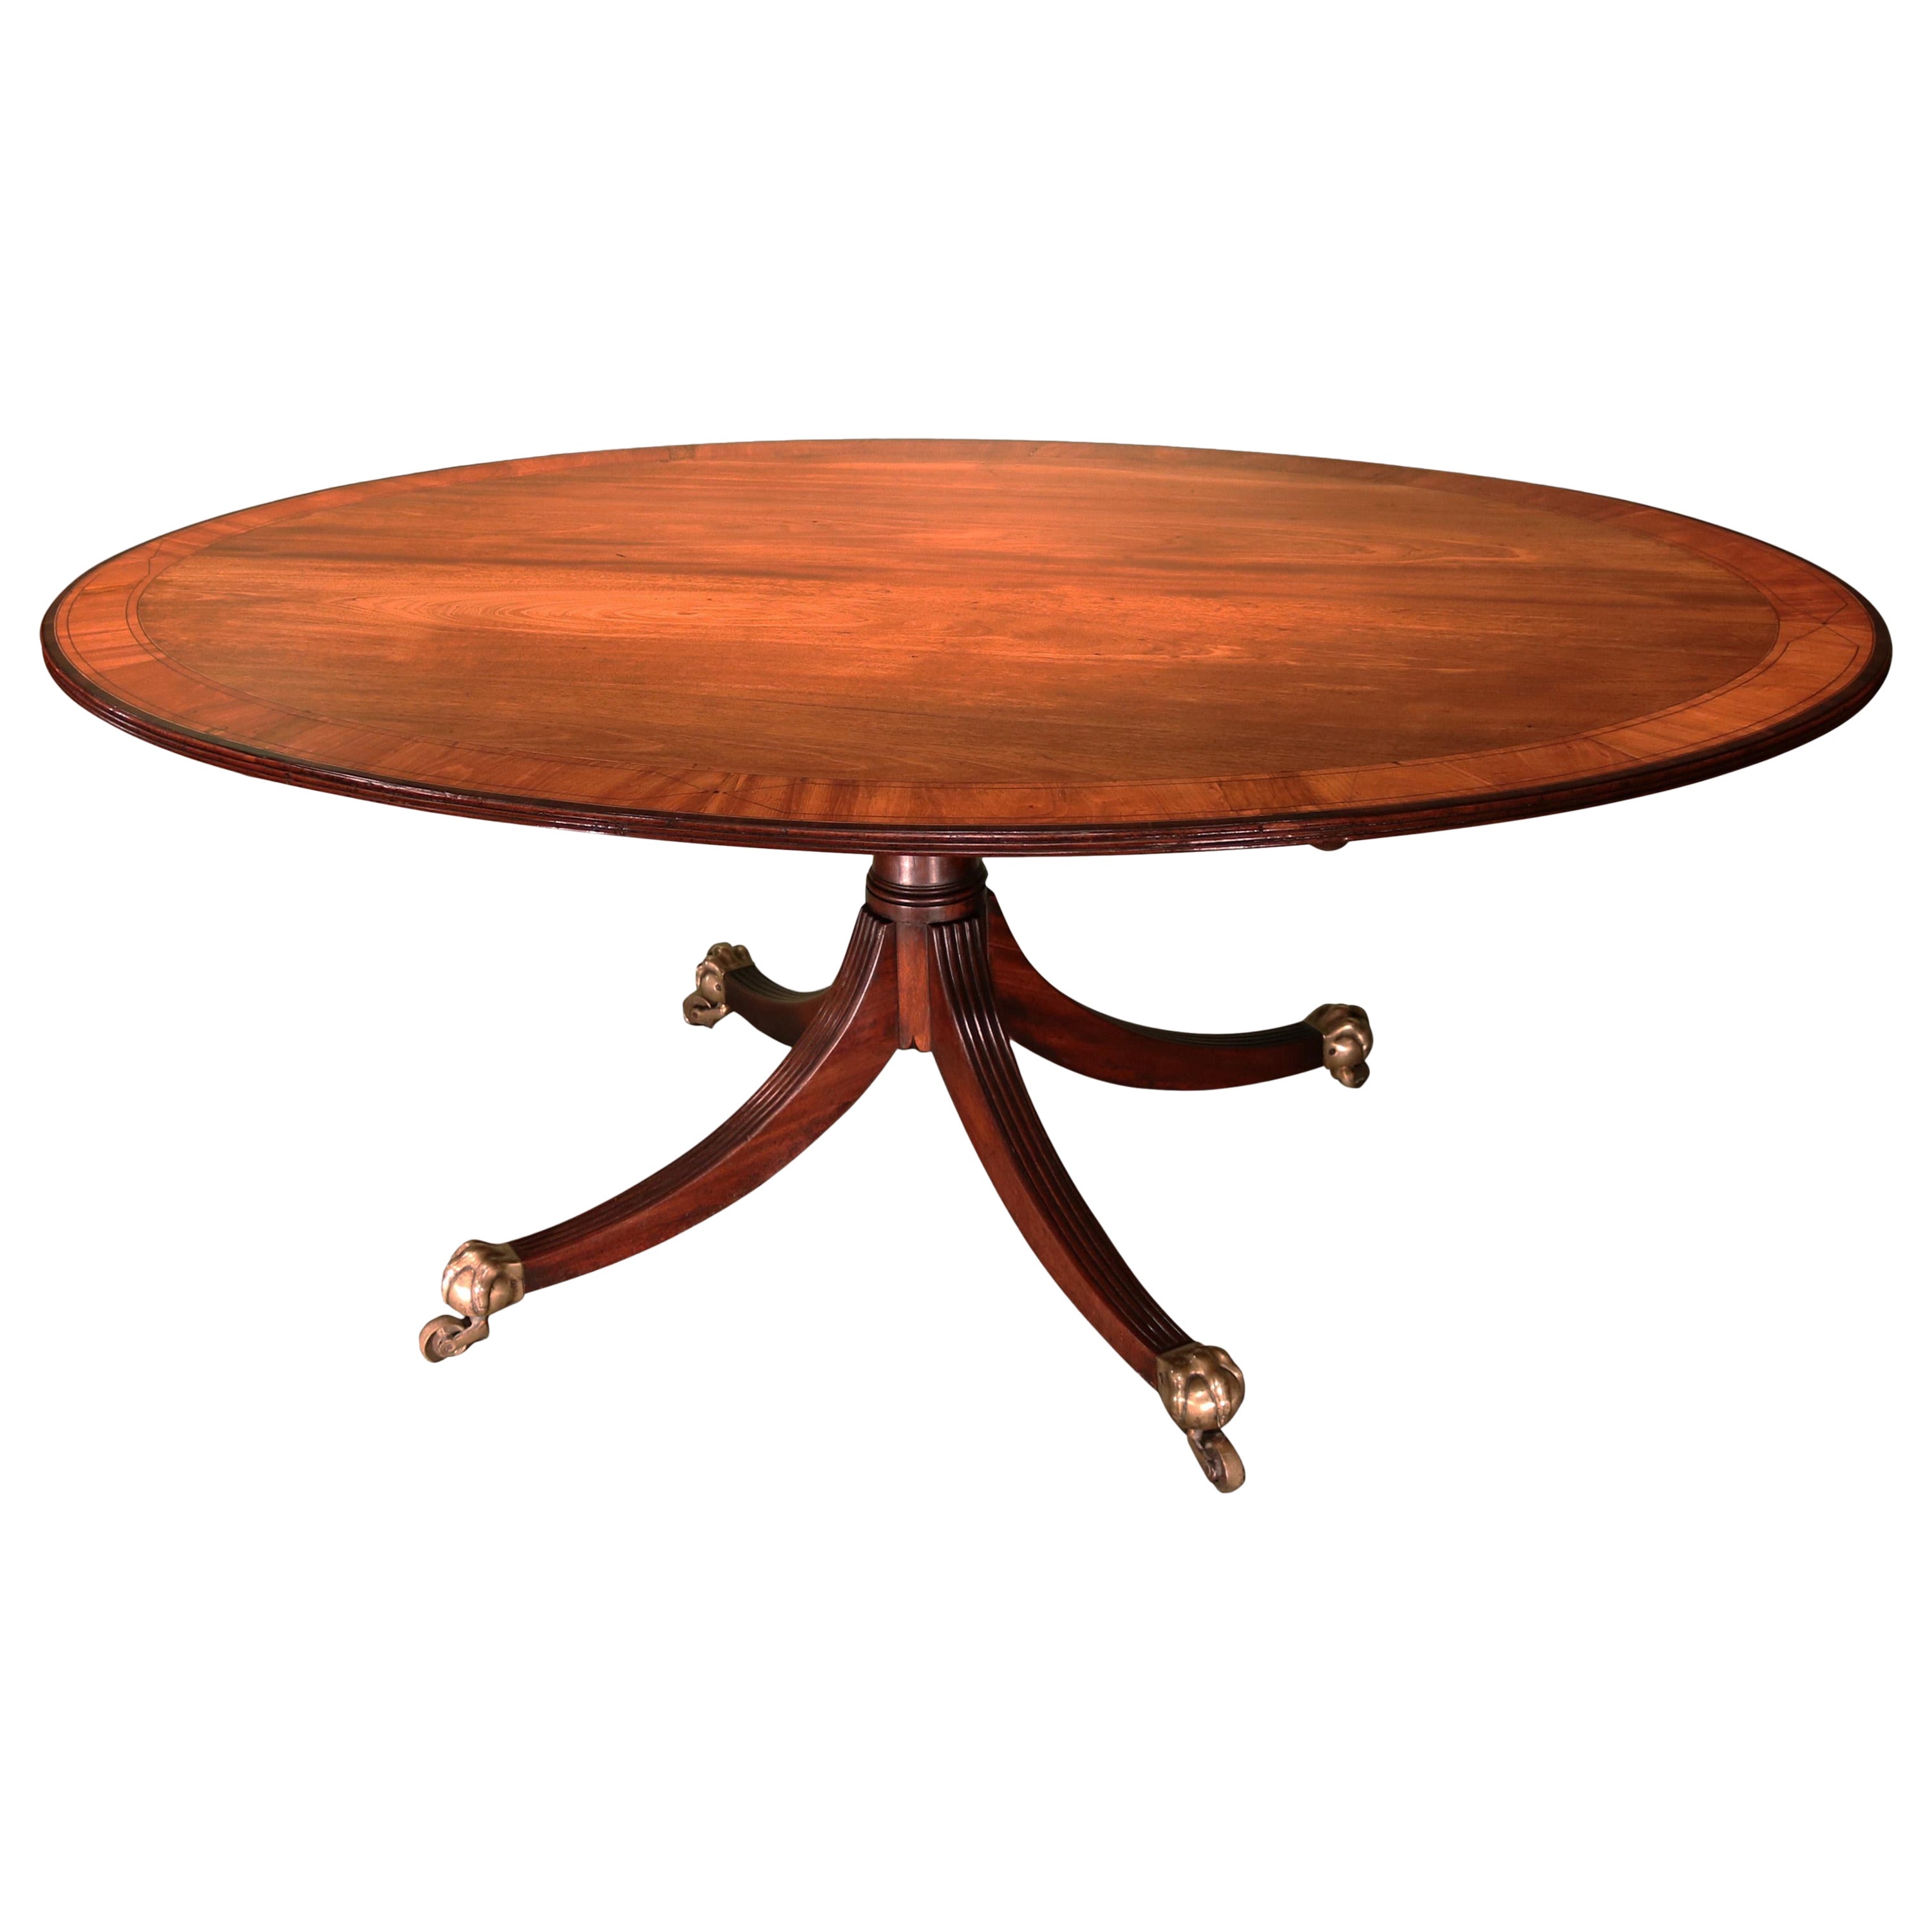 Antique George III period figured mahogany oval breakfast table